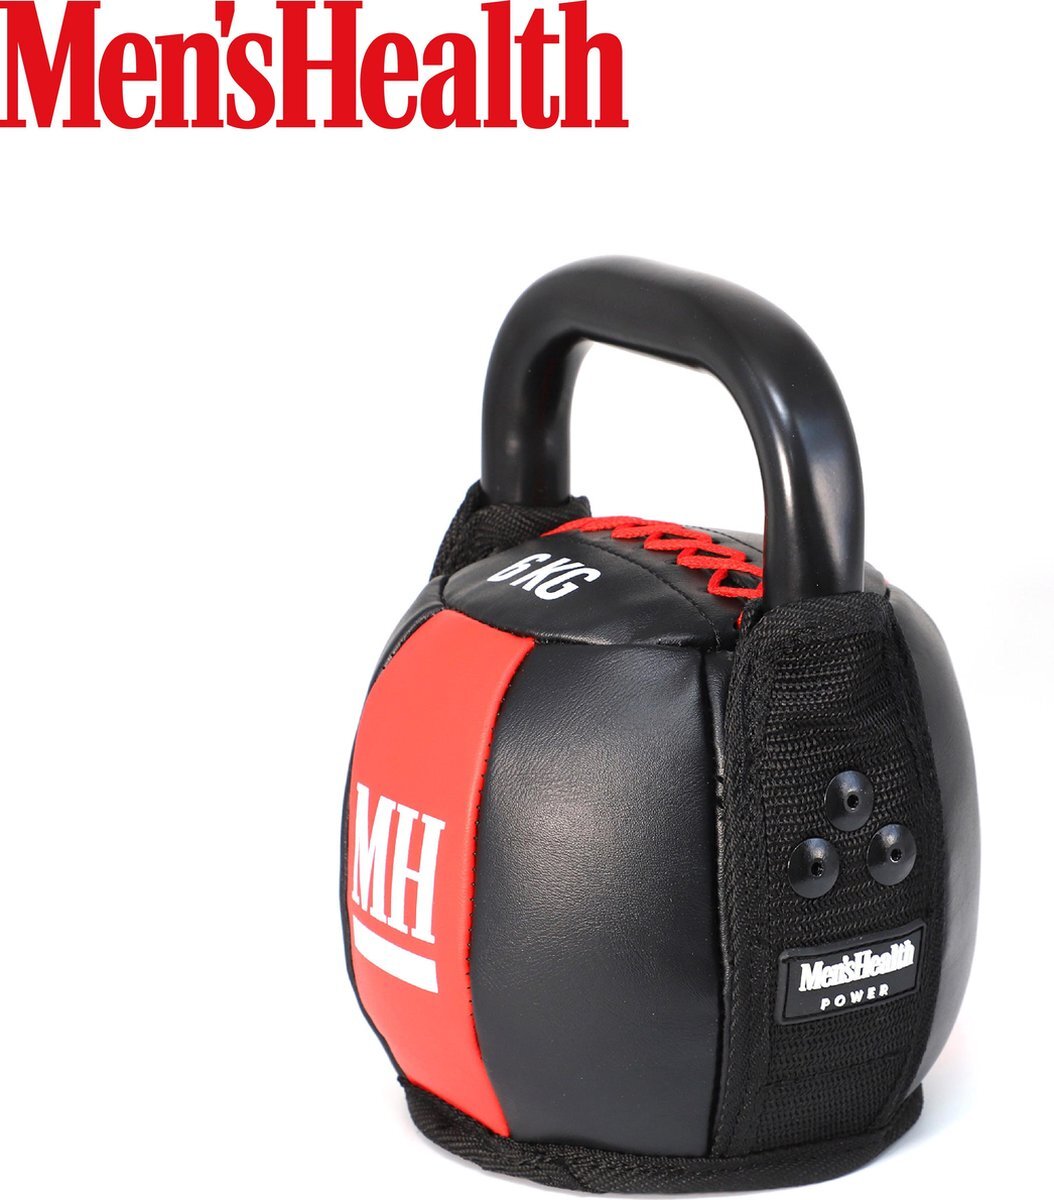 Menshealth Menâ€™s health soft kettlebell, 6kg â€“ perfect voor fullbody cardio- en krachttraining